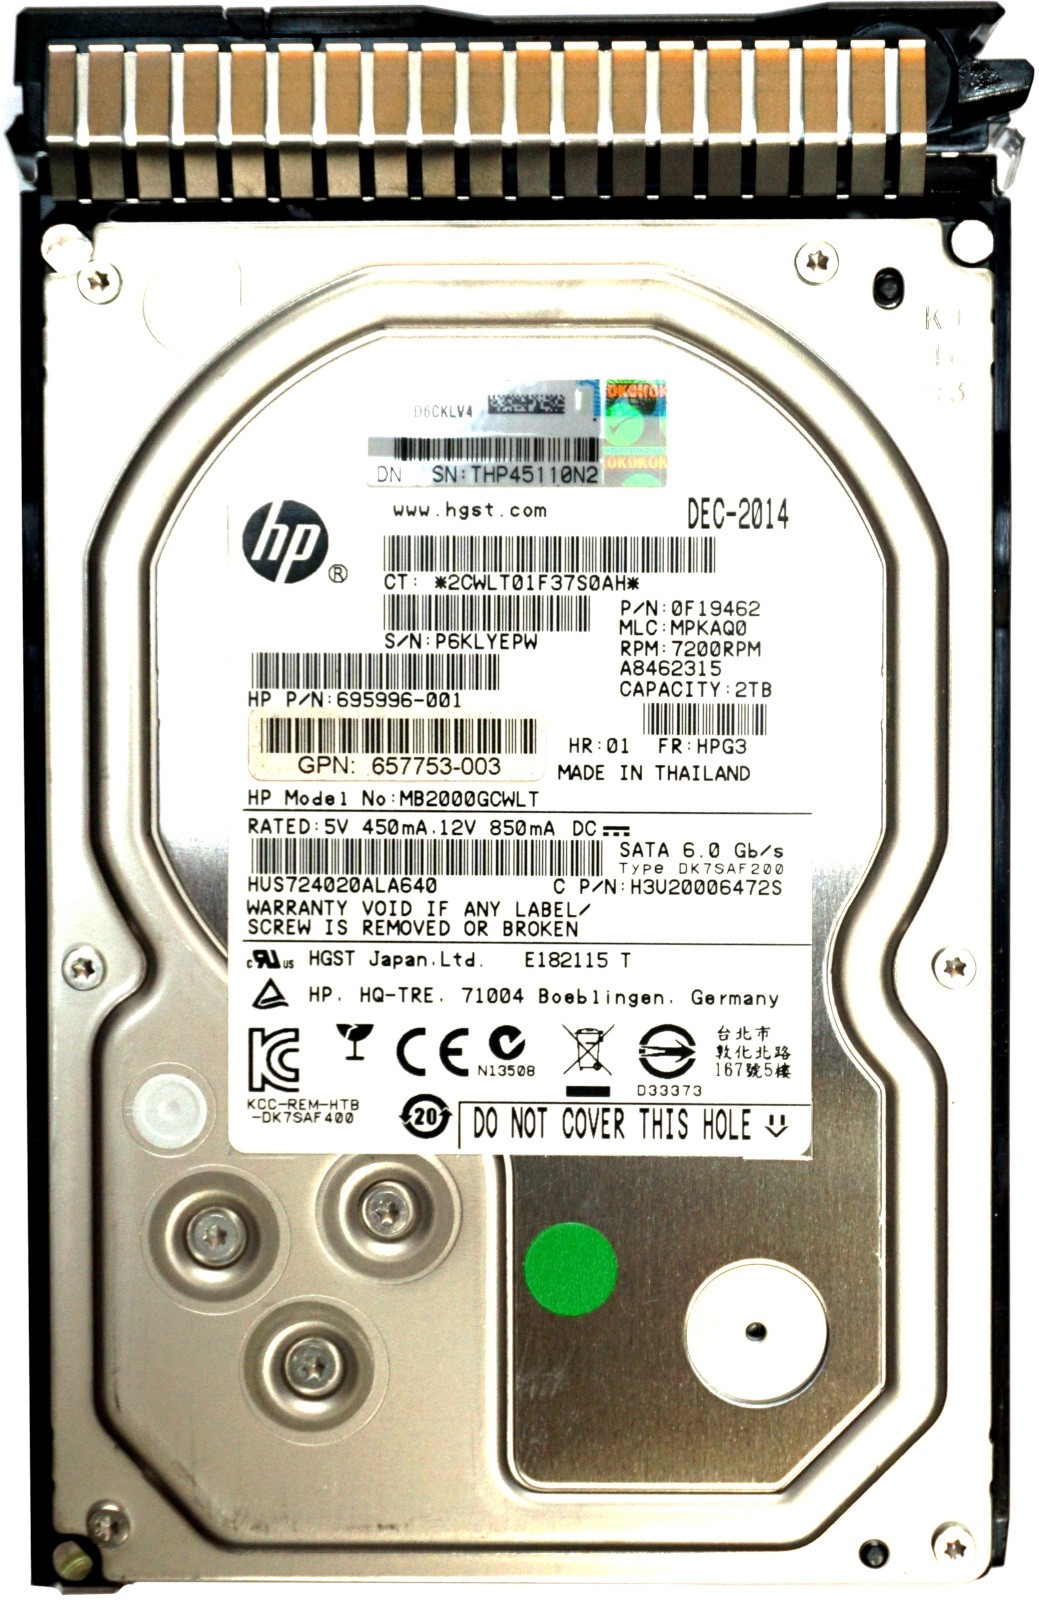 HP (695996-001) 2TB Midline SATA (3.5") 6Gbps 7.2K HDD in Gen8 Hot-Swap Caddy